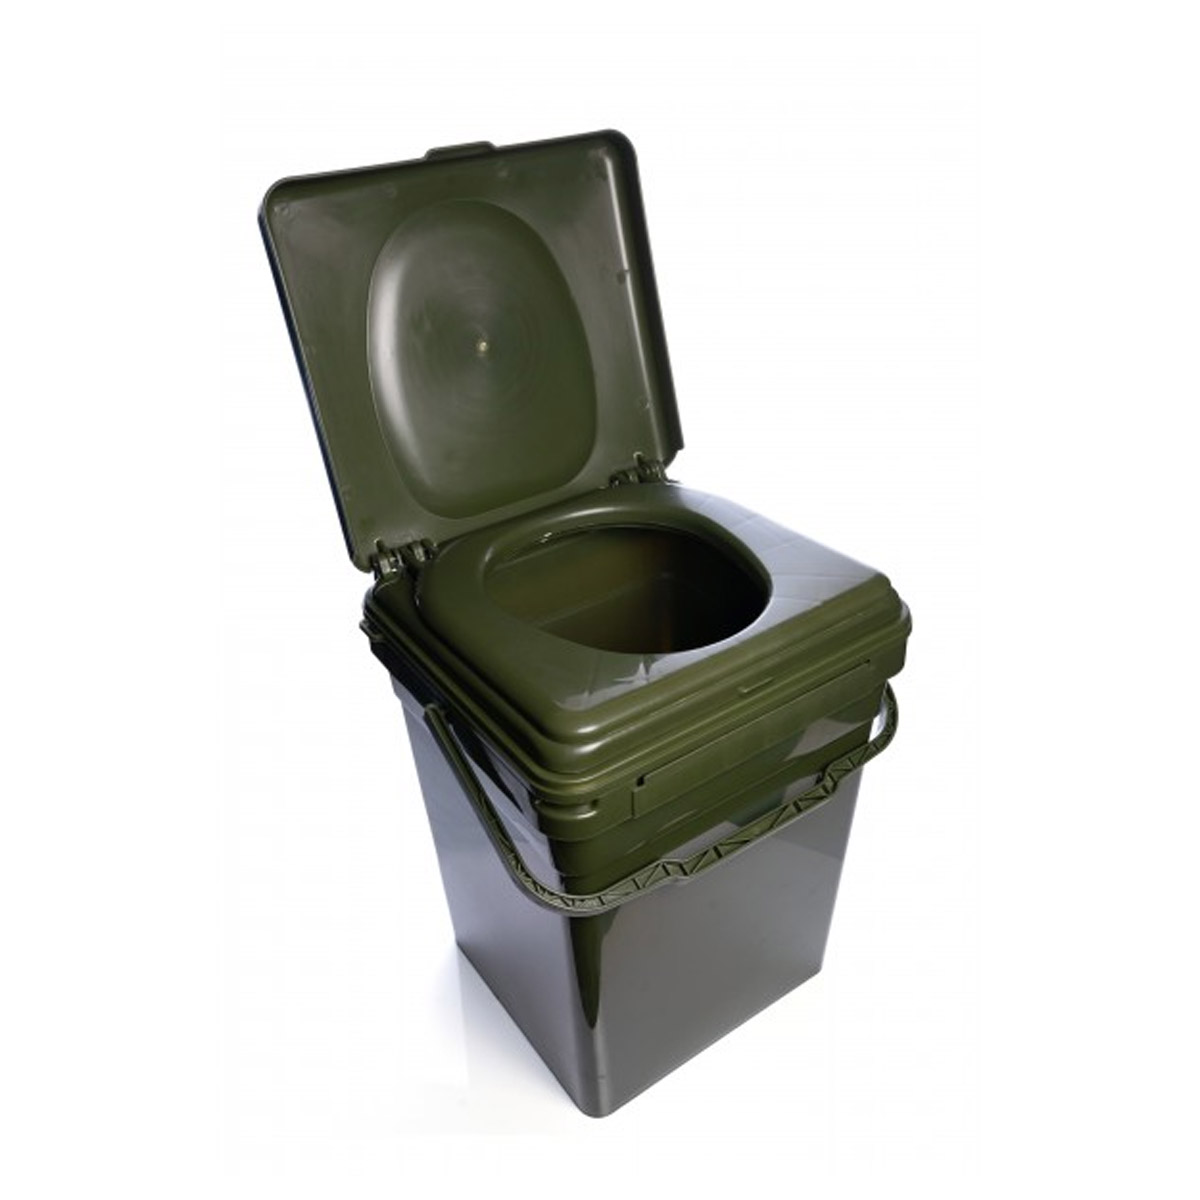 Ridgemonkey cozee toilet seat